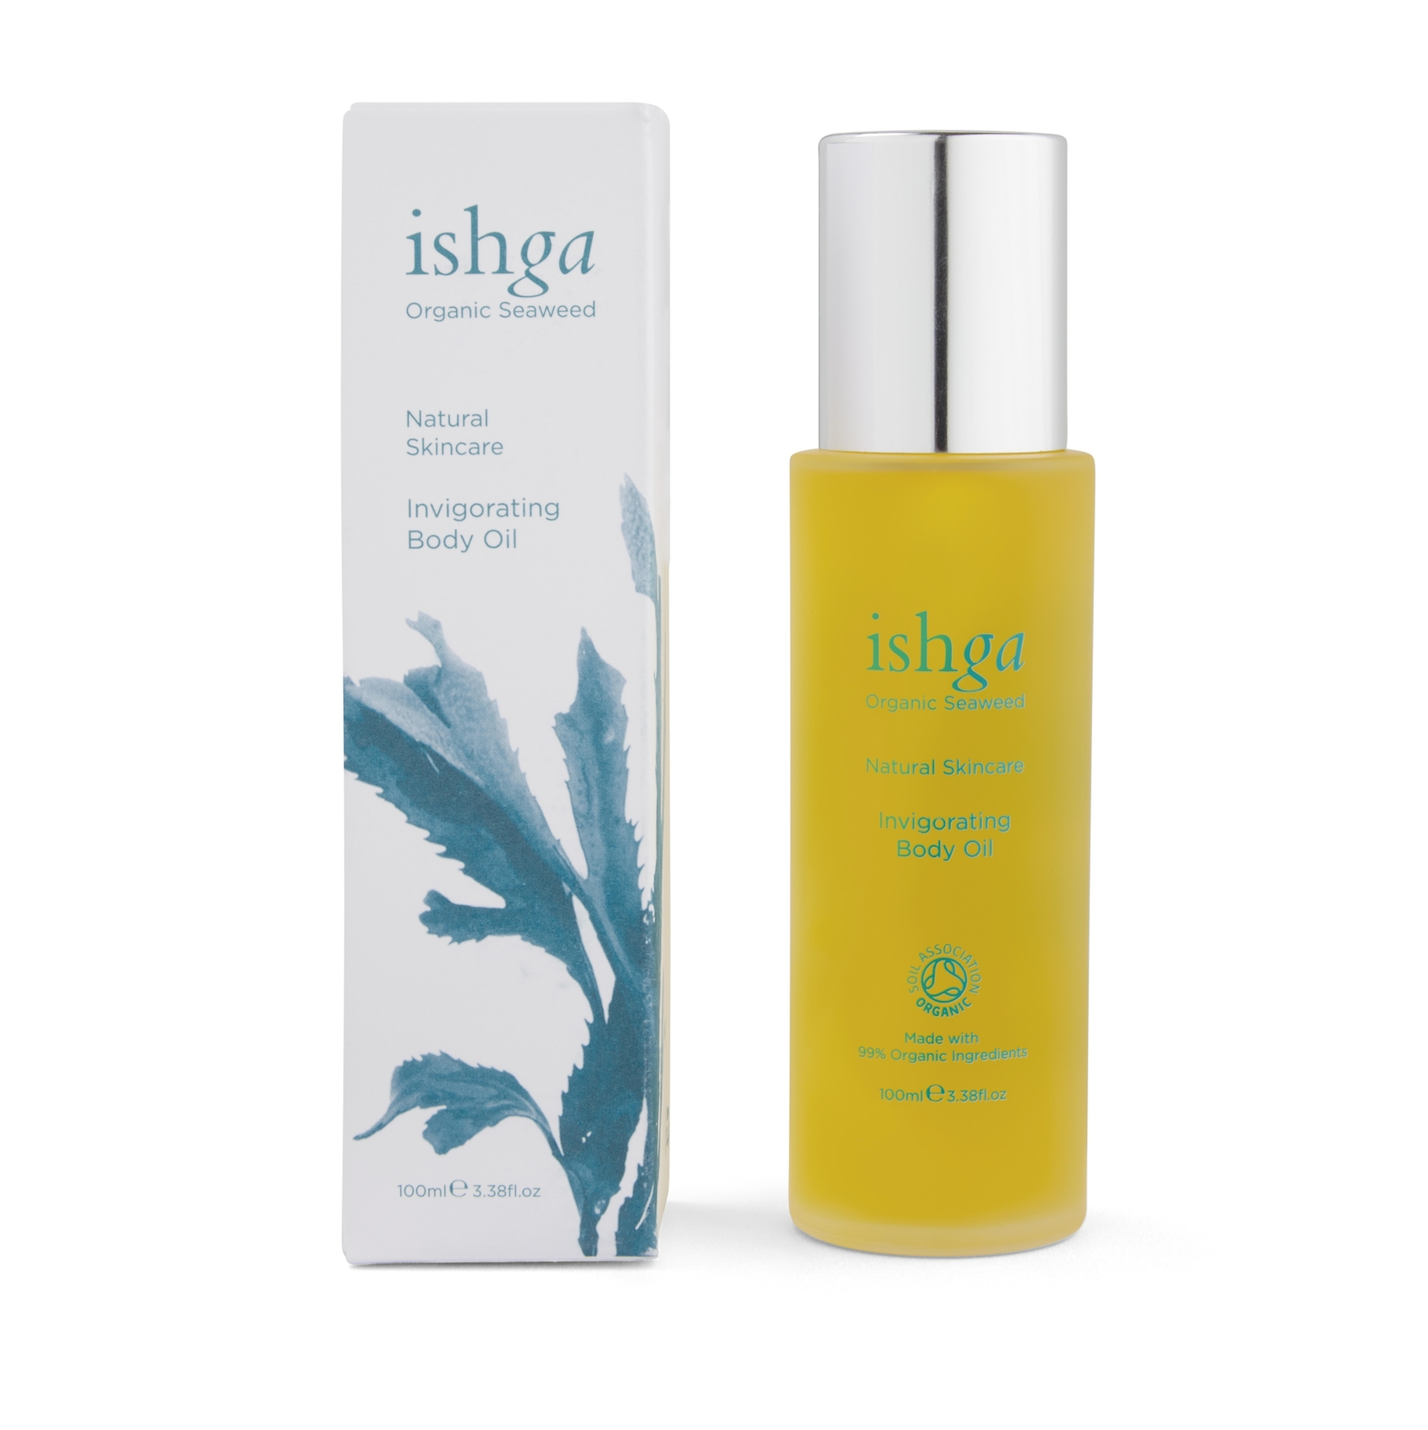 Bottle of ishga Invigorating Organic Body Oil next to its box